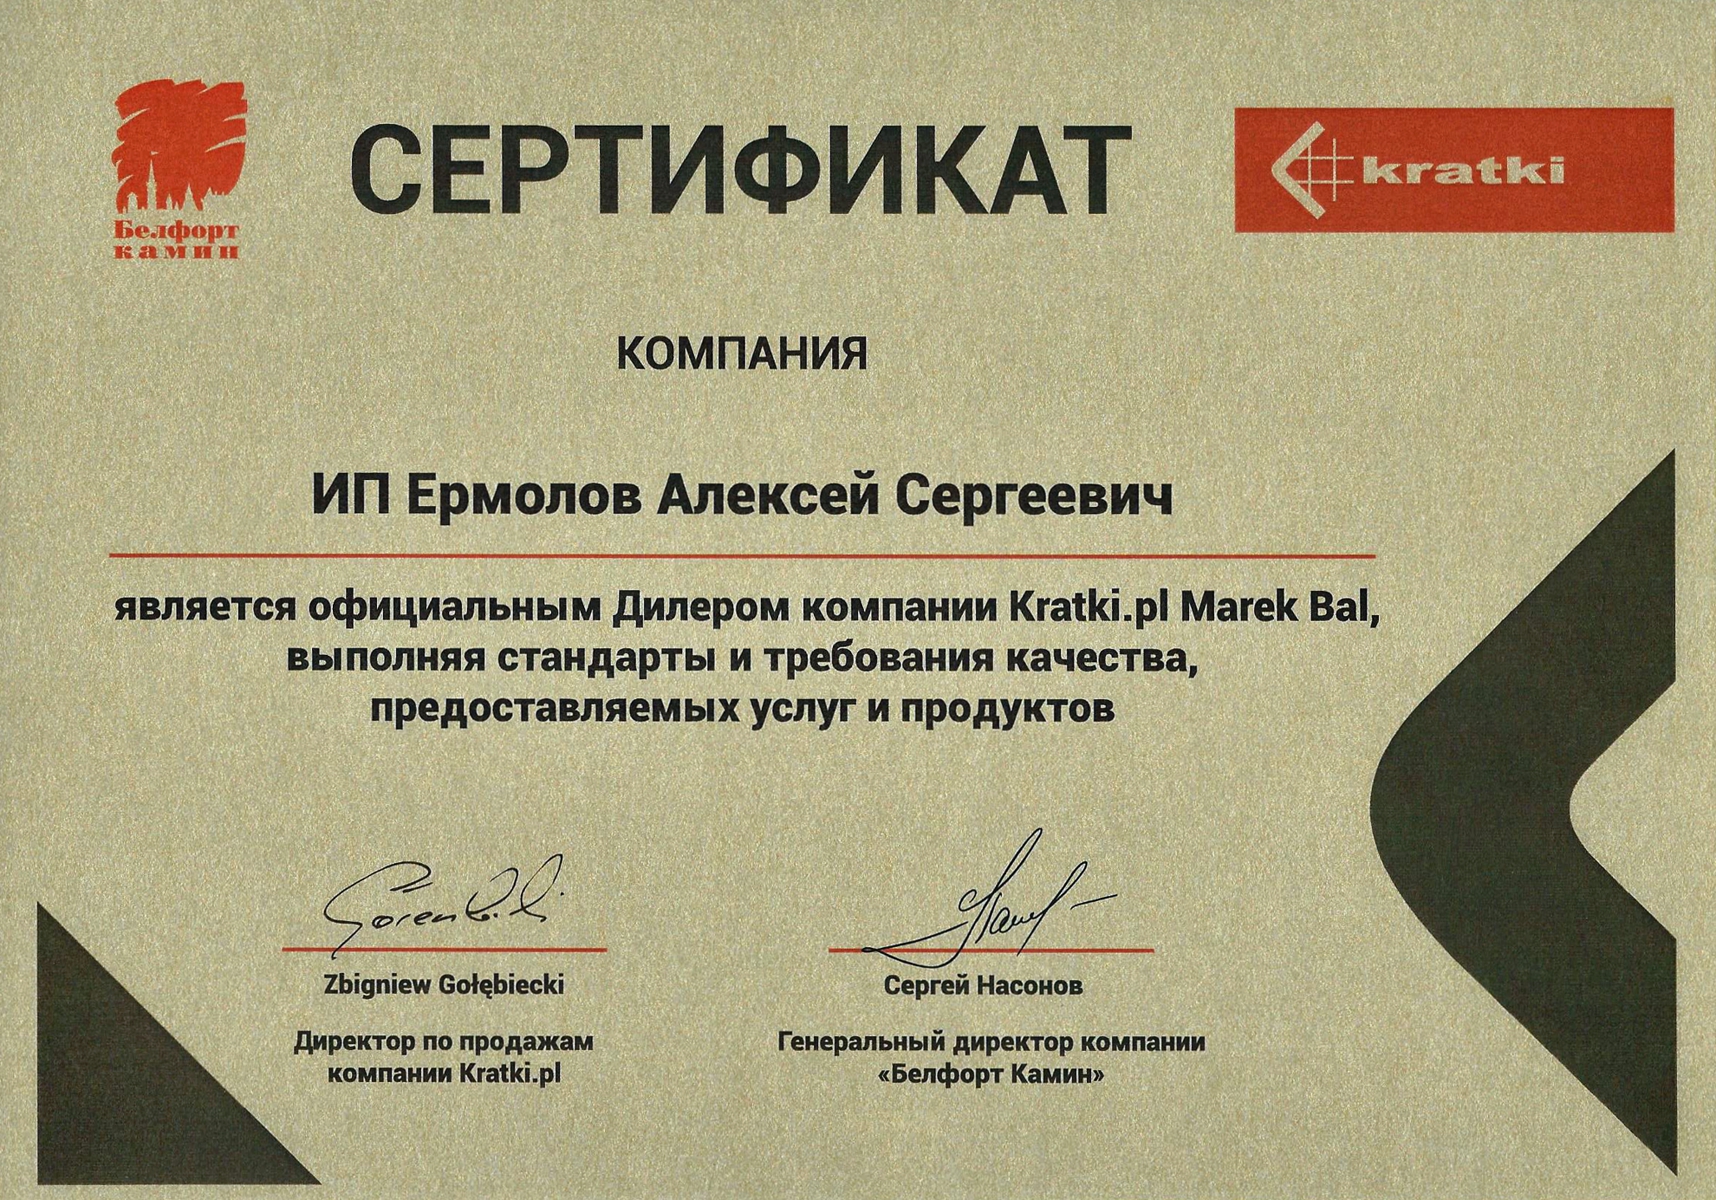 Сертификат_дилера_Kratki.jpg